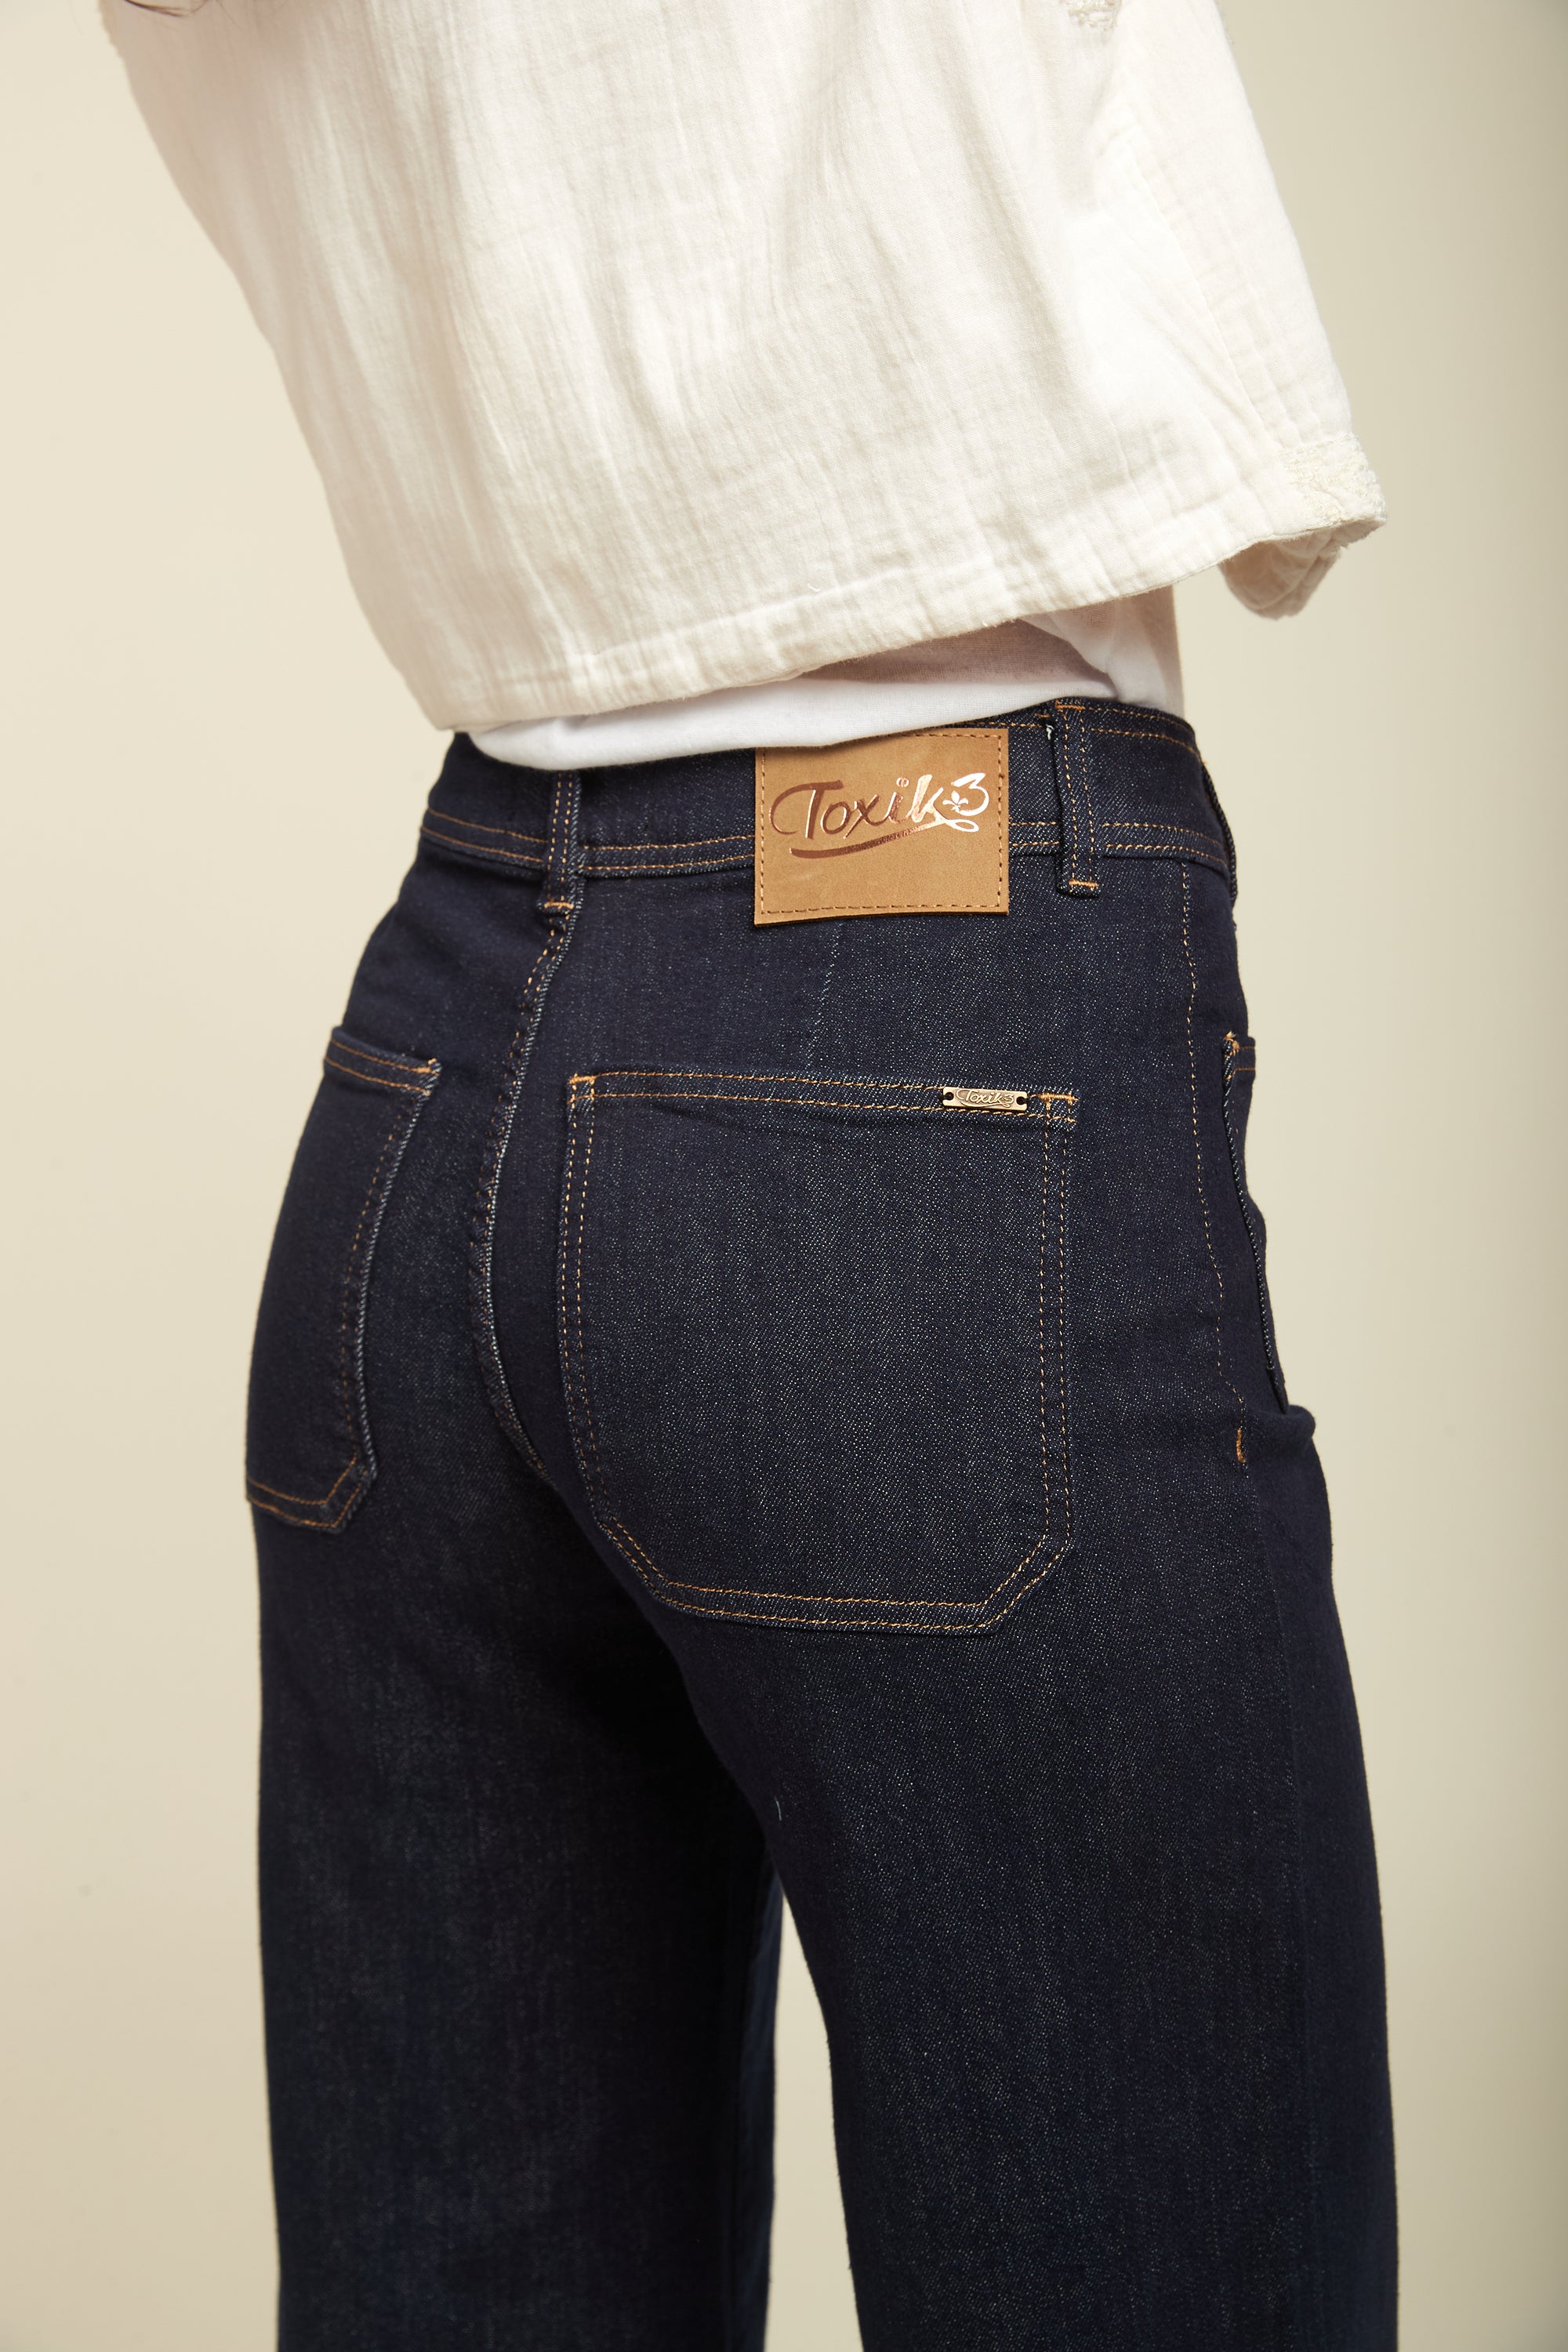 Flaar La Vared Jeans Placked Pocket - Raquel (Compo)